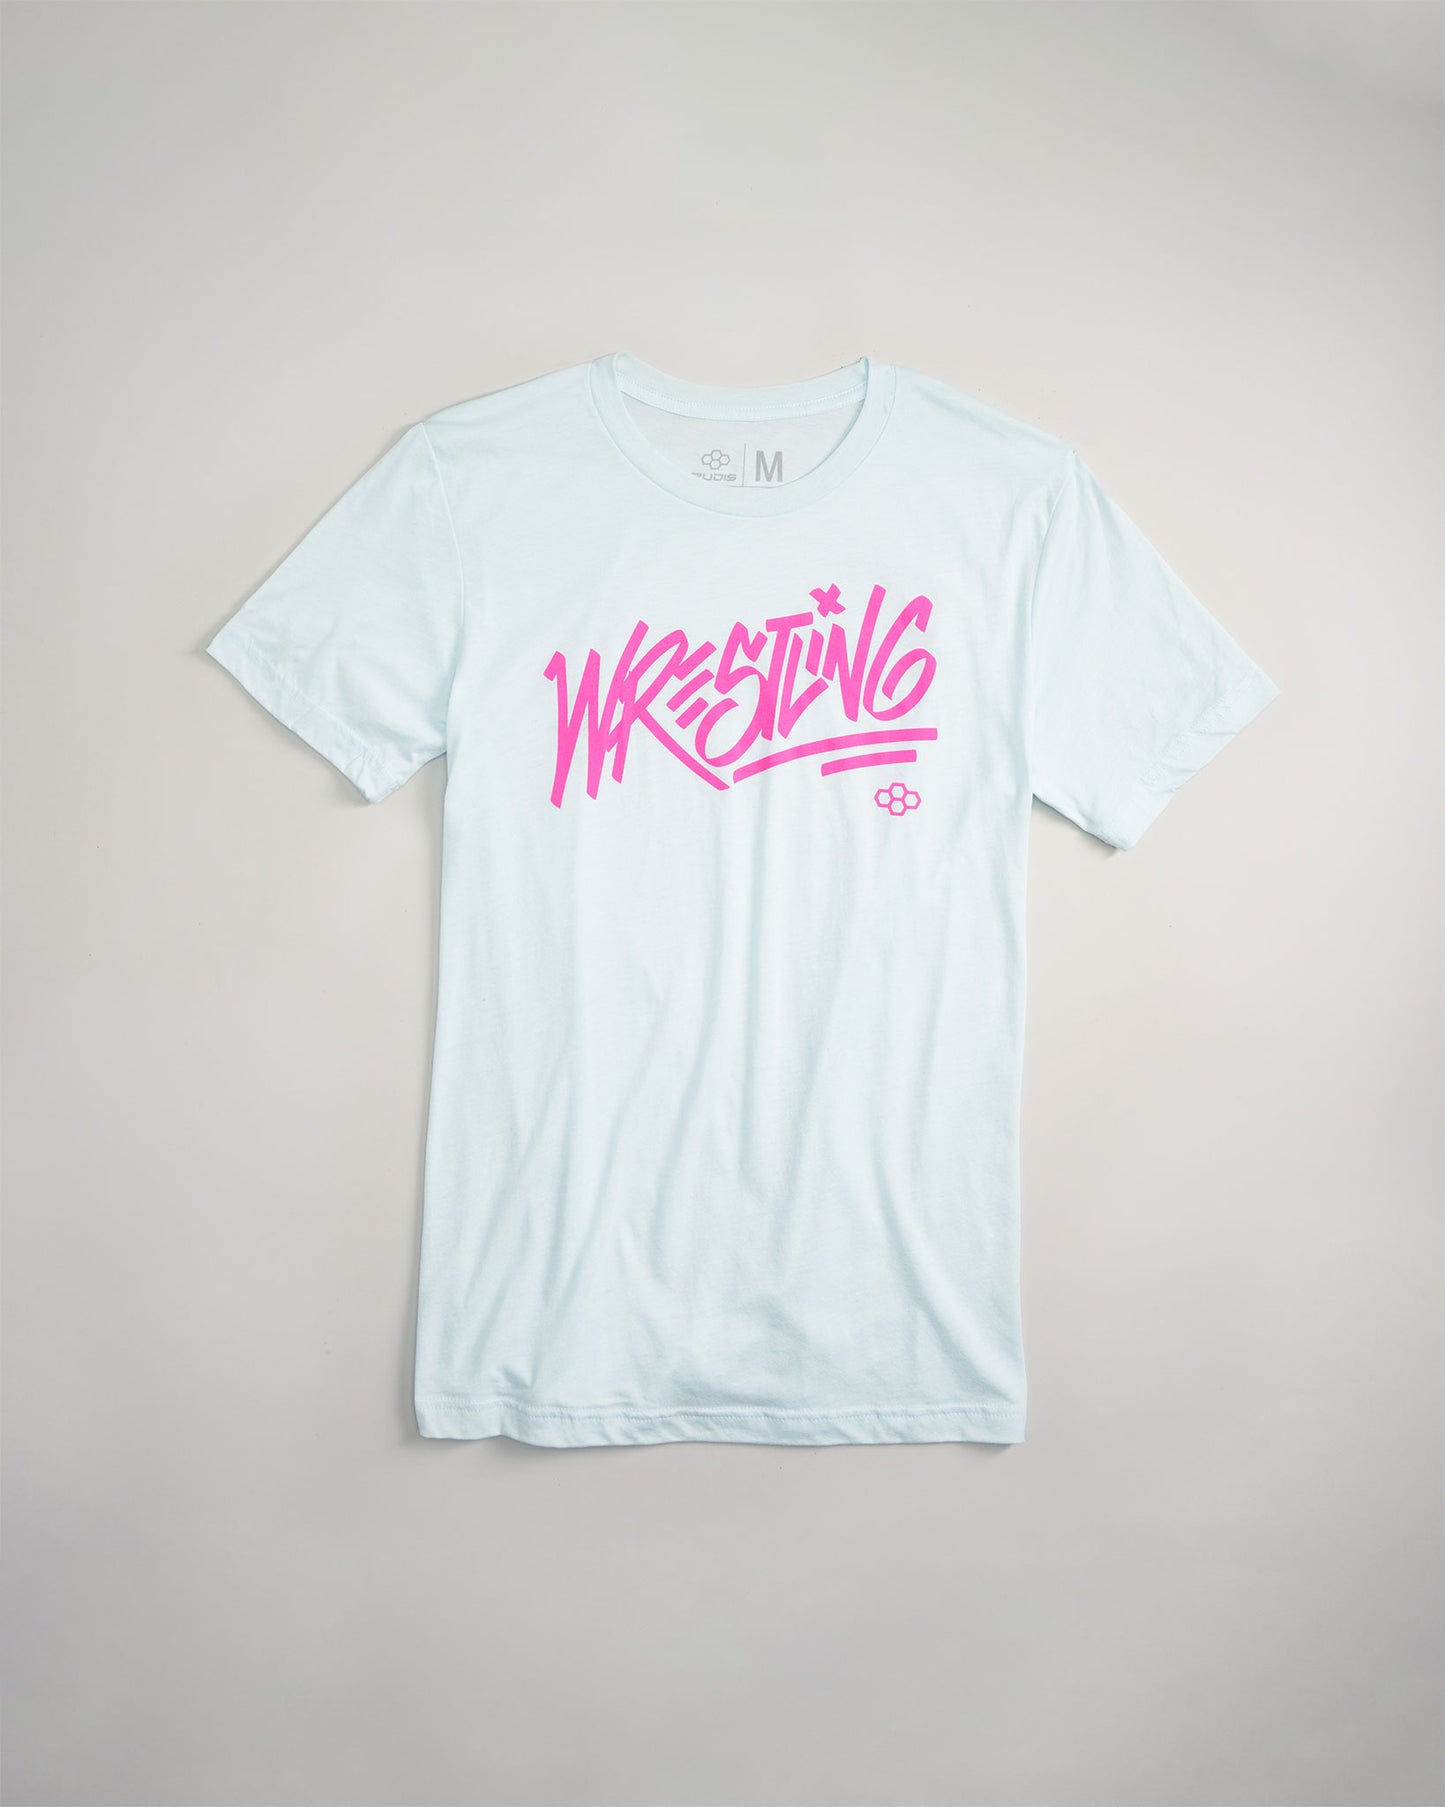 RUDIS Wrestling Graffiti T-Shirt